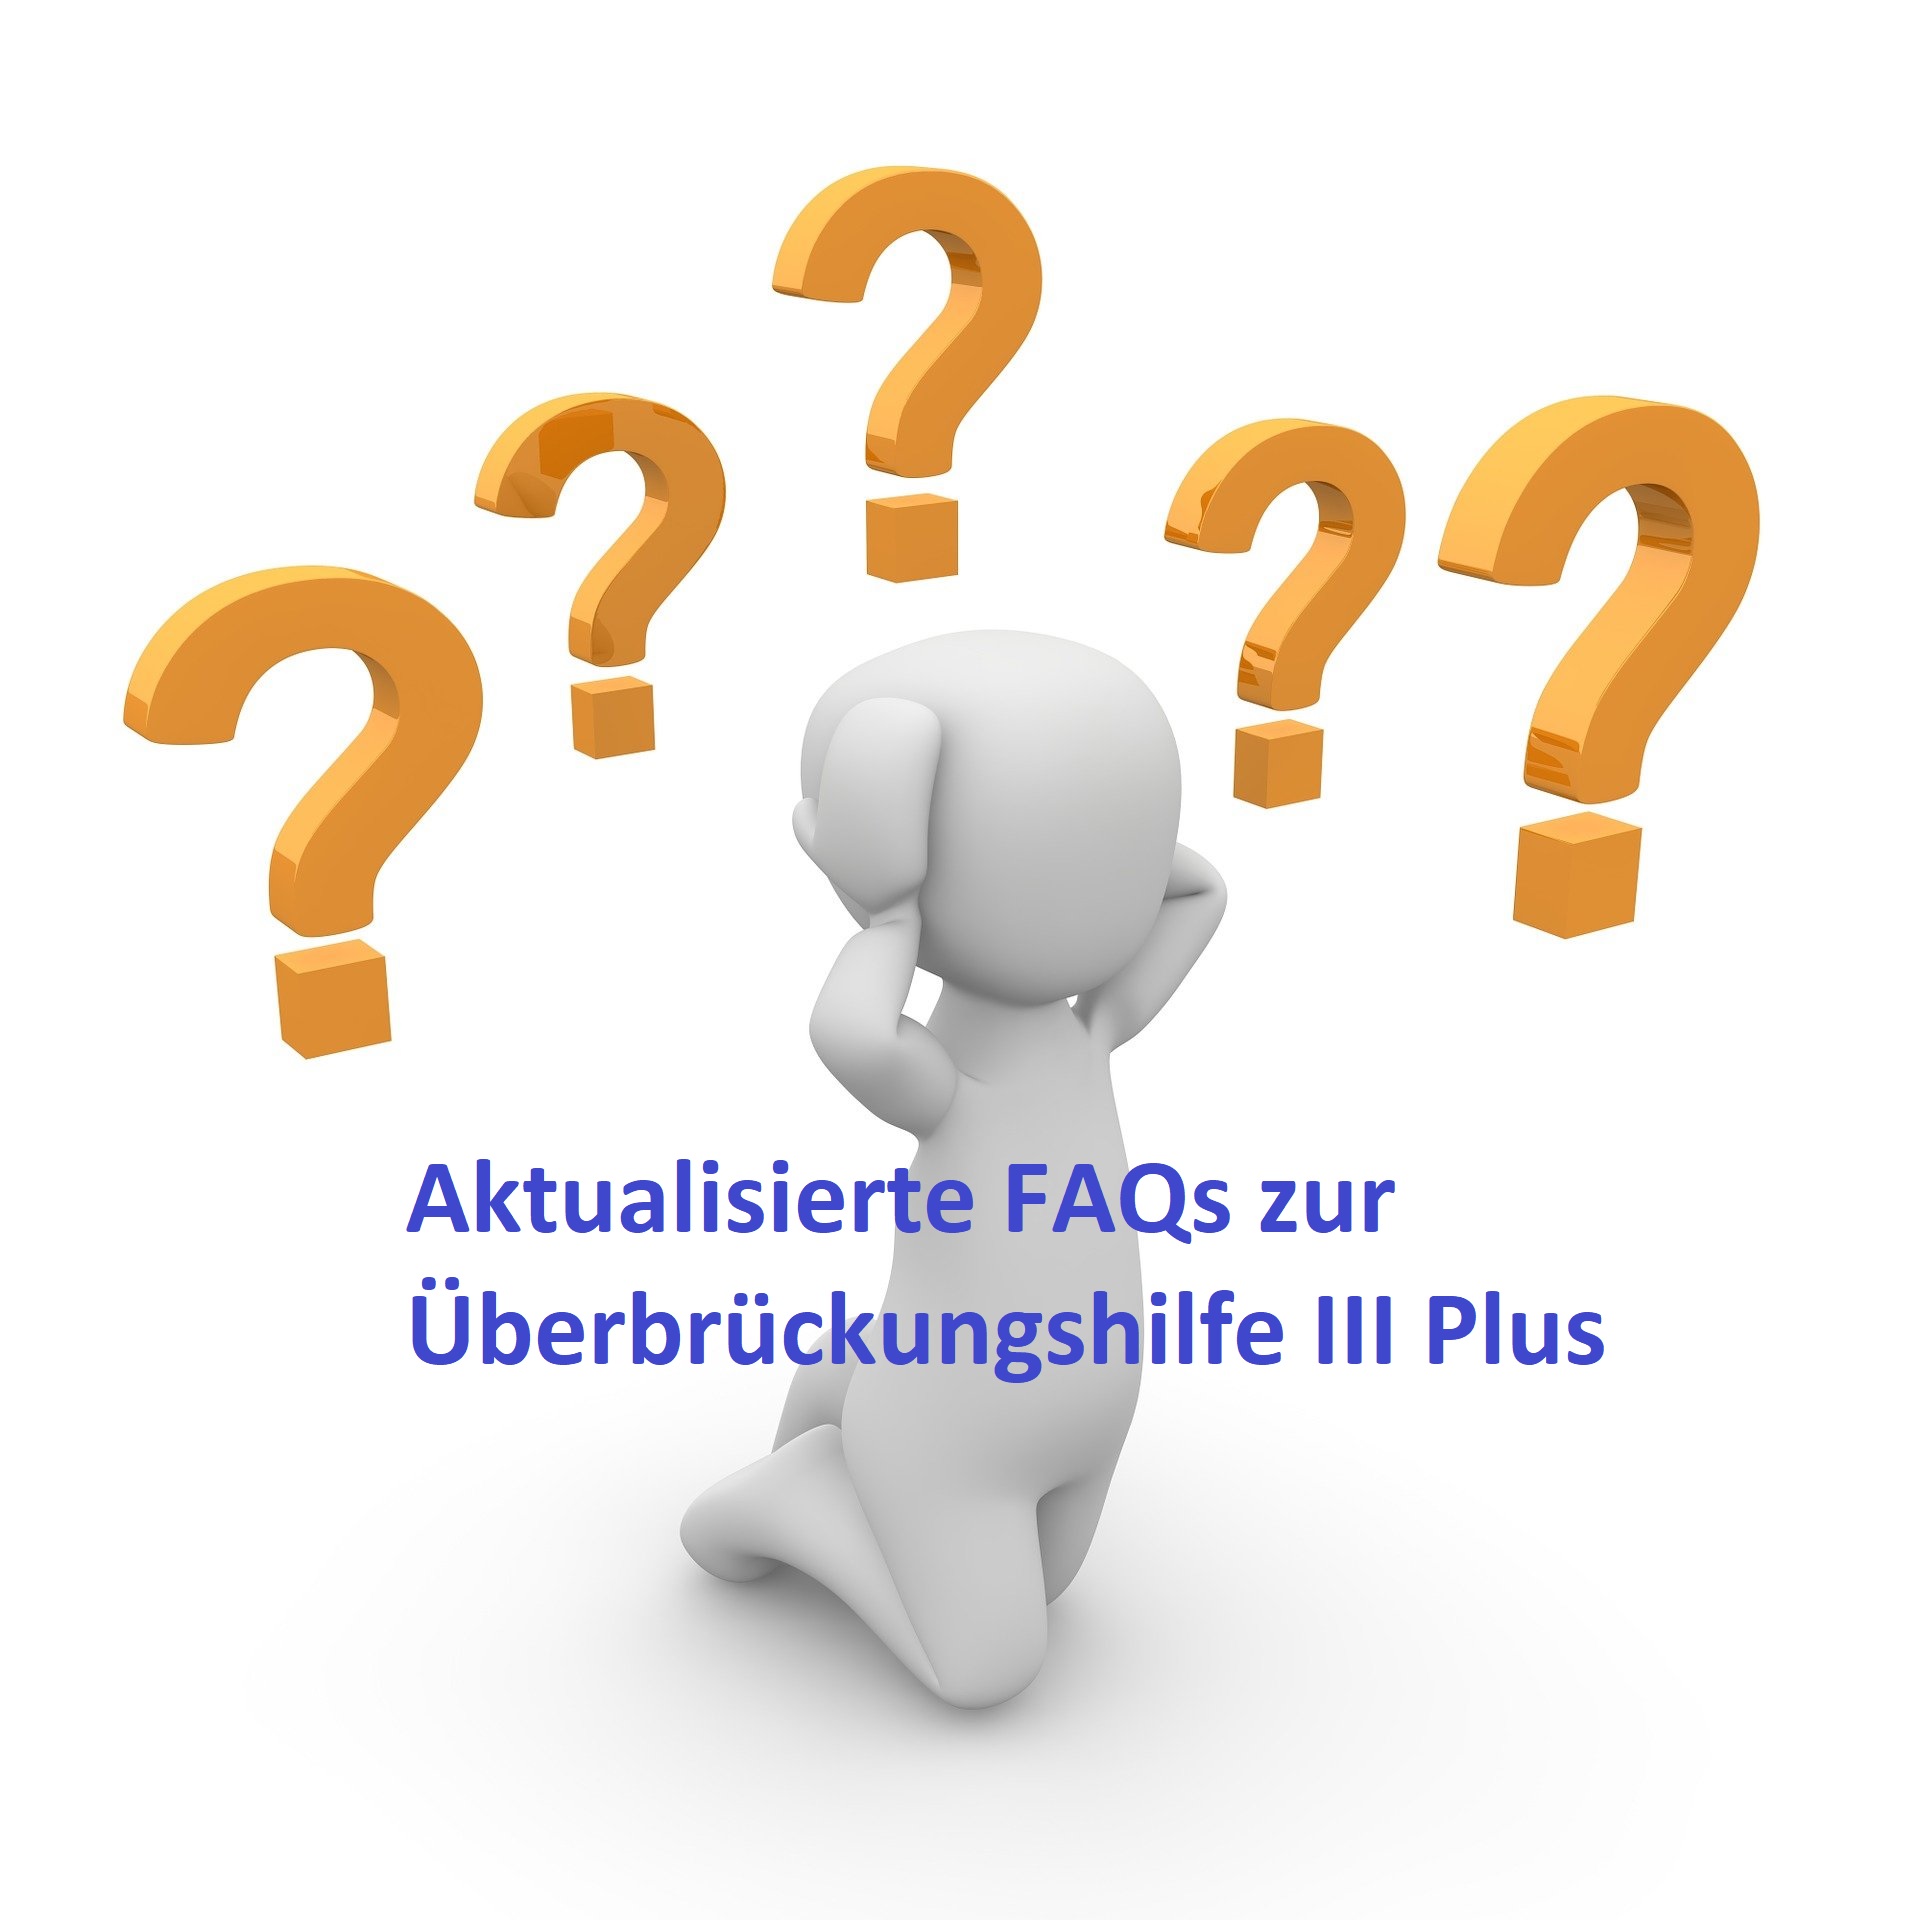 DEHOGA Nordrhein Aktualisierte FAQs zur Überbrückungshilfe III Plus